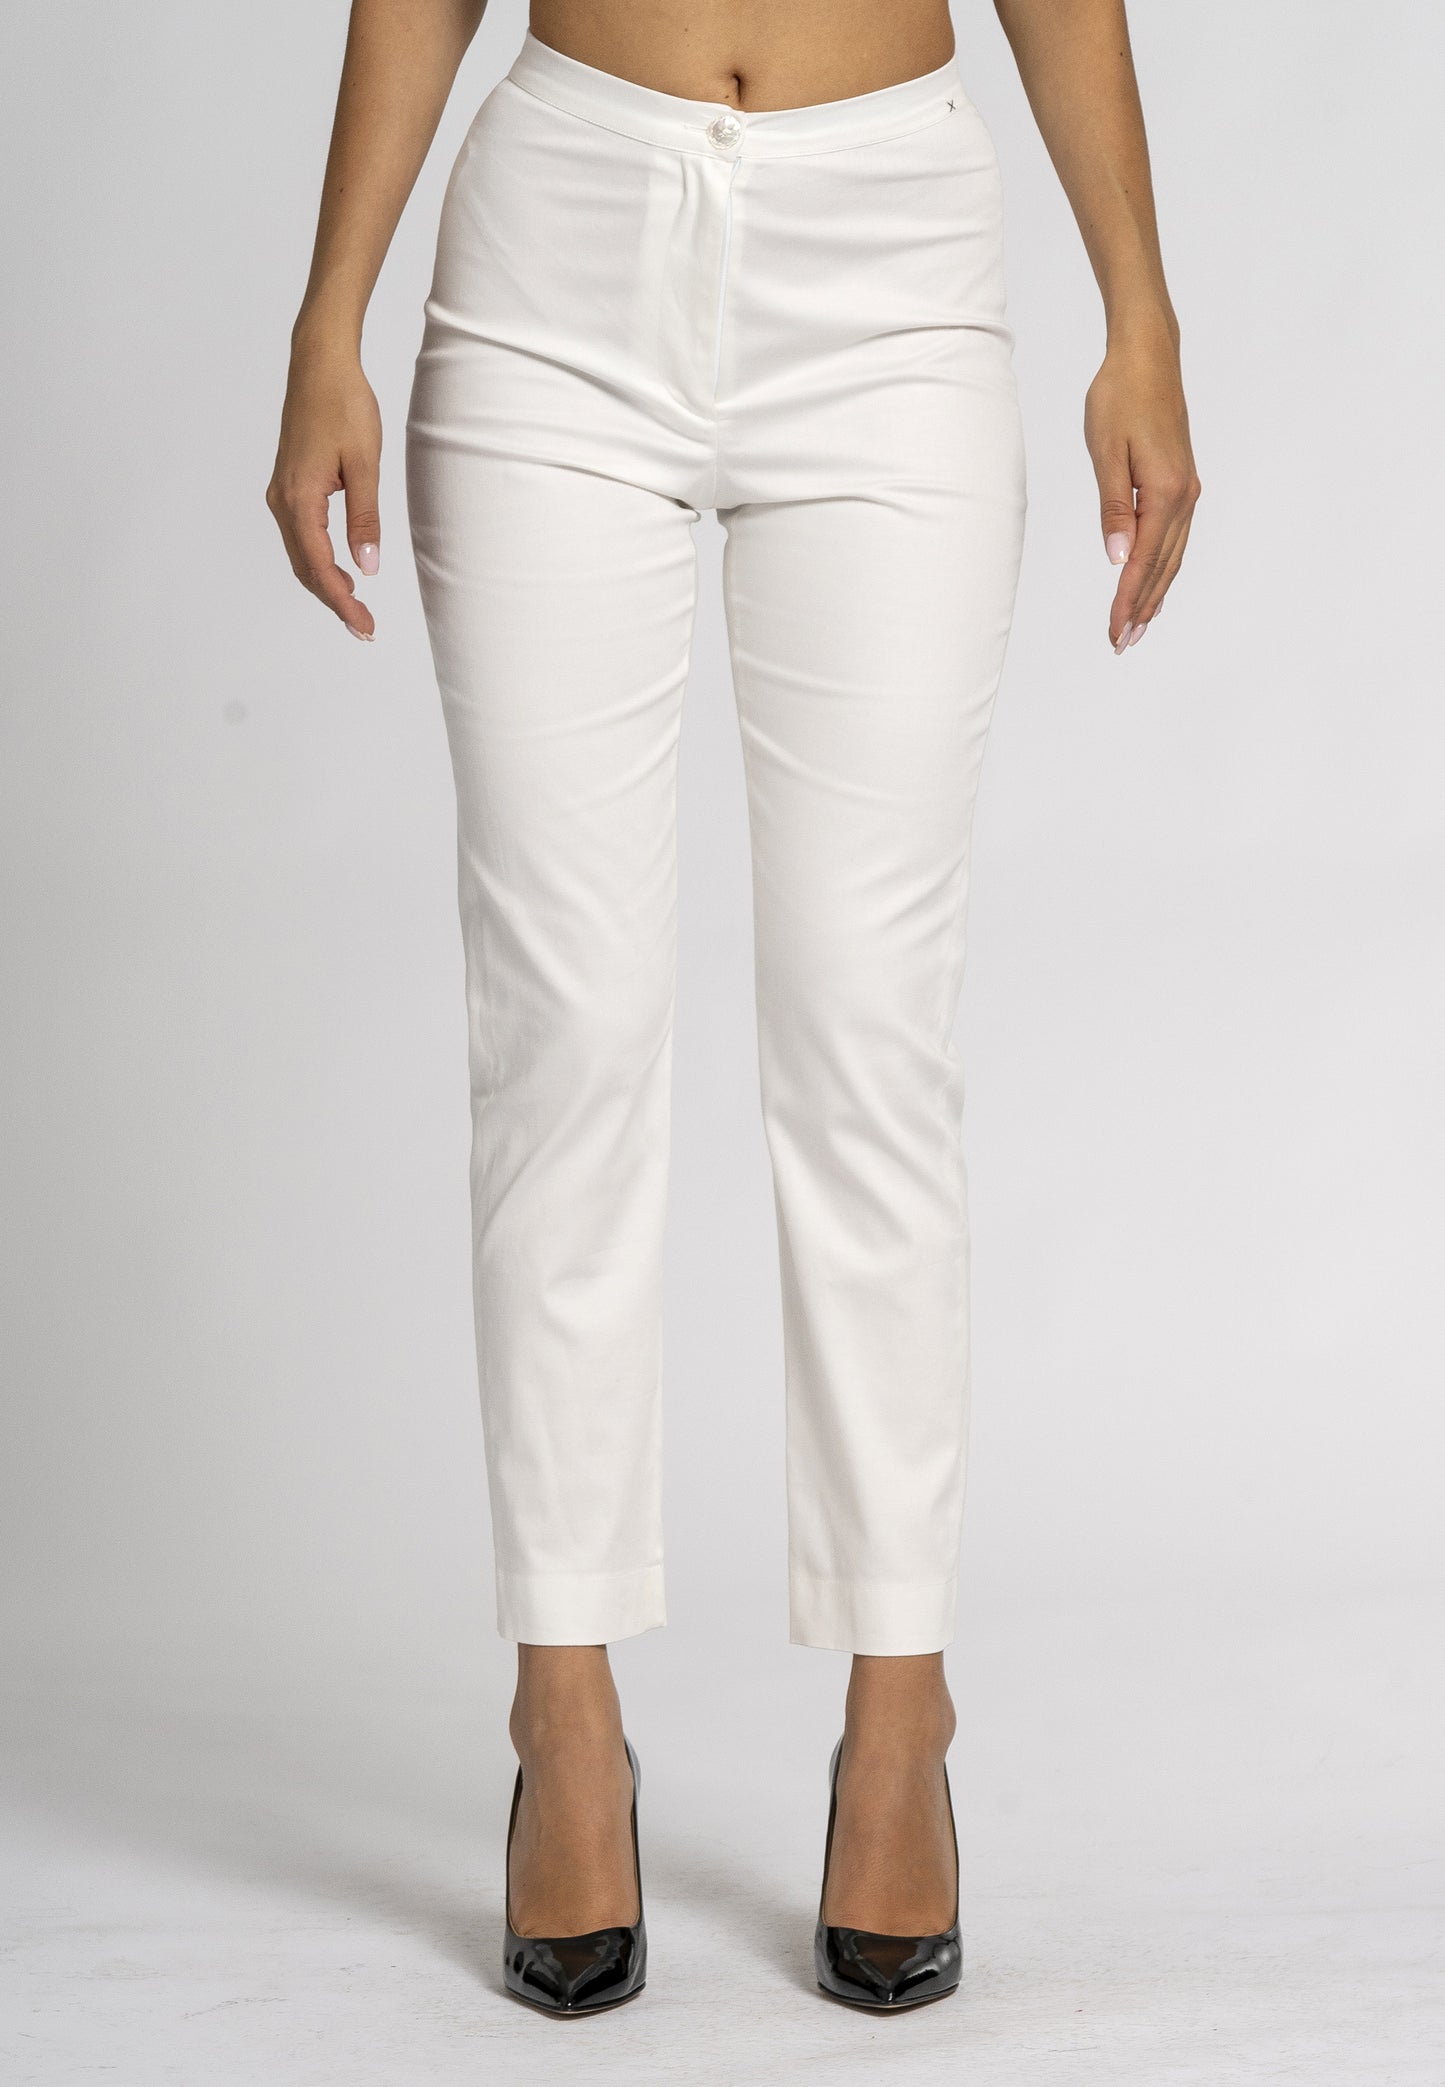 Primula Slim Fit Pants - White Stretch Cotton, Ankle-Length Leg, Zip a ...